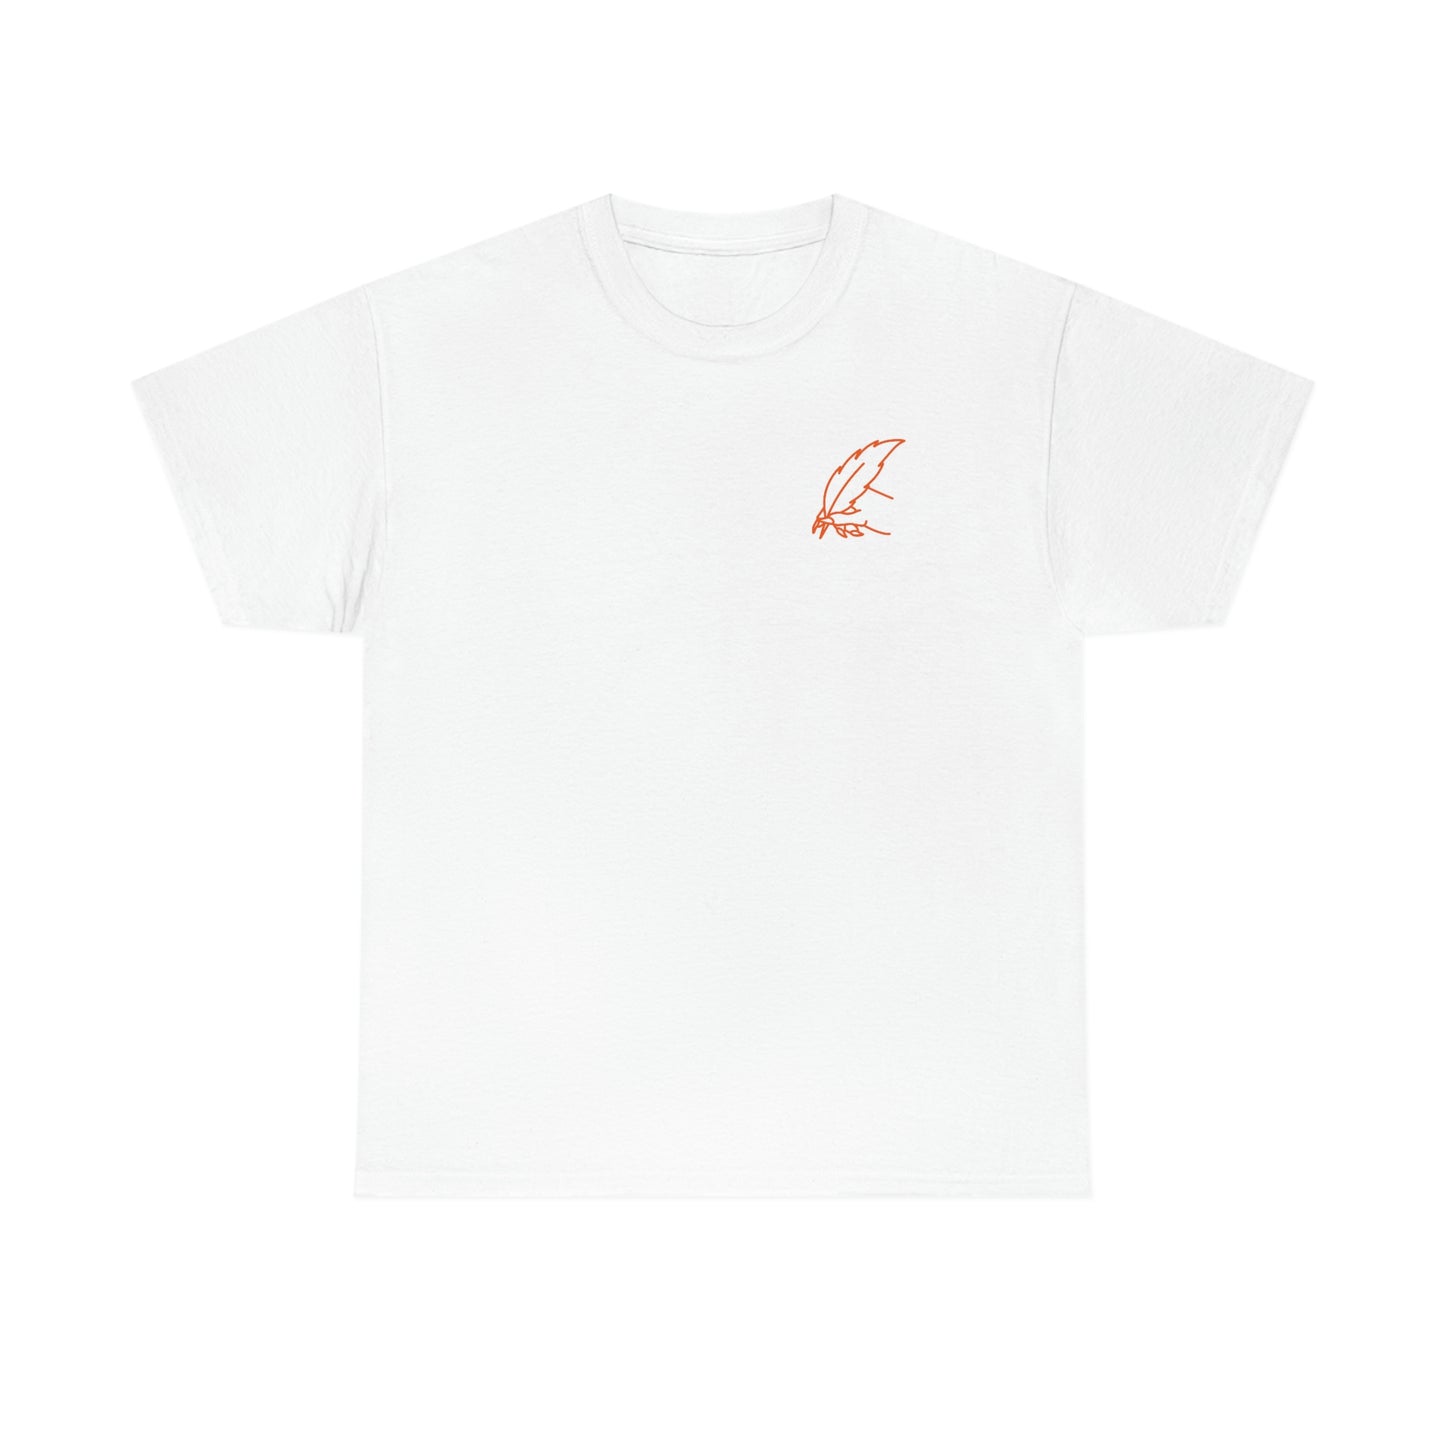 T-Shirt RSVP 2022 - Blanc (Unisex)